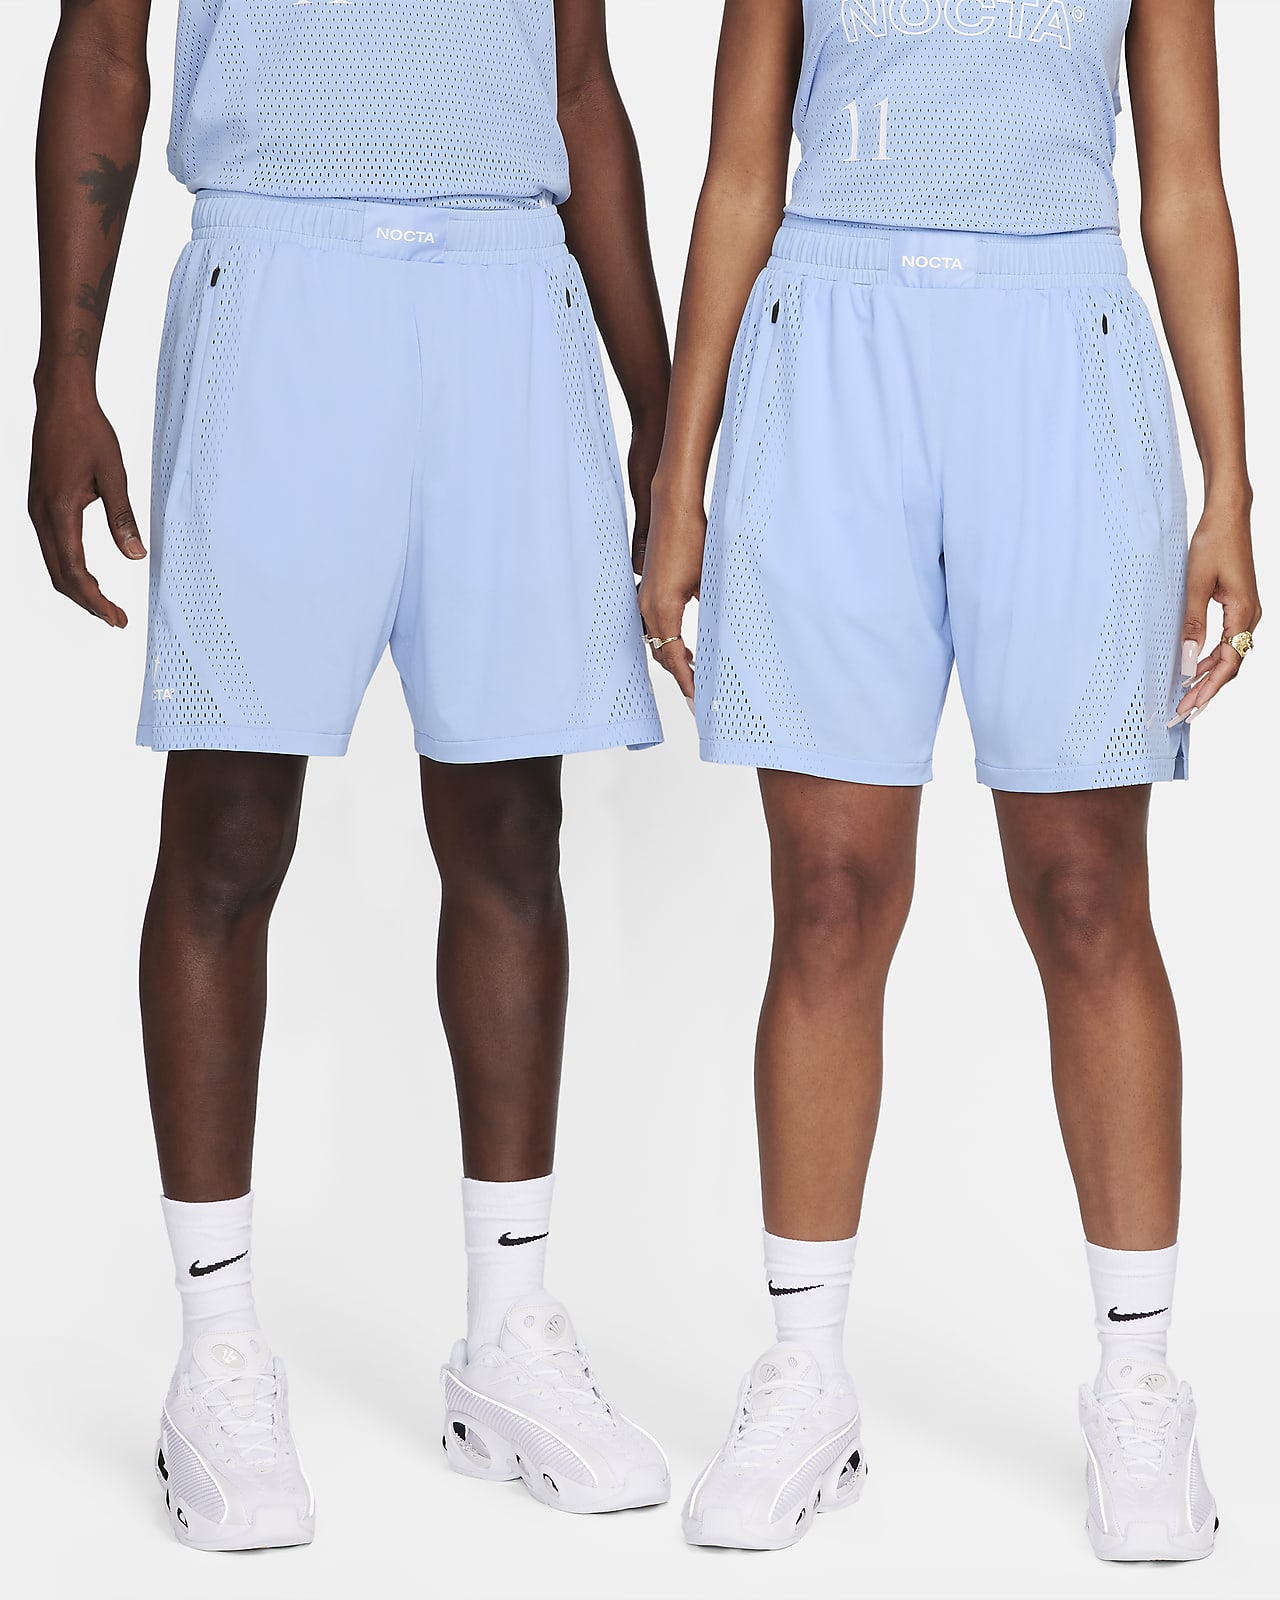 Shorts Nike Dri-FIT NOCTA – Uomo